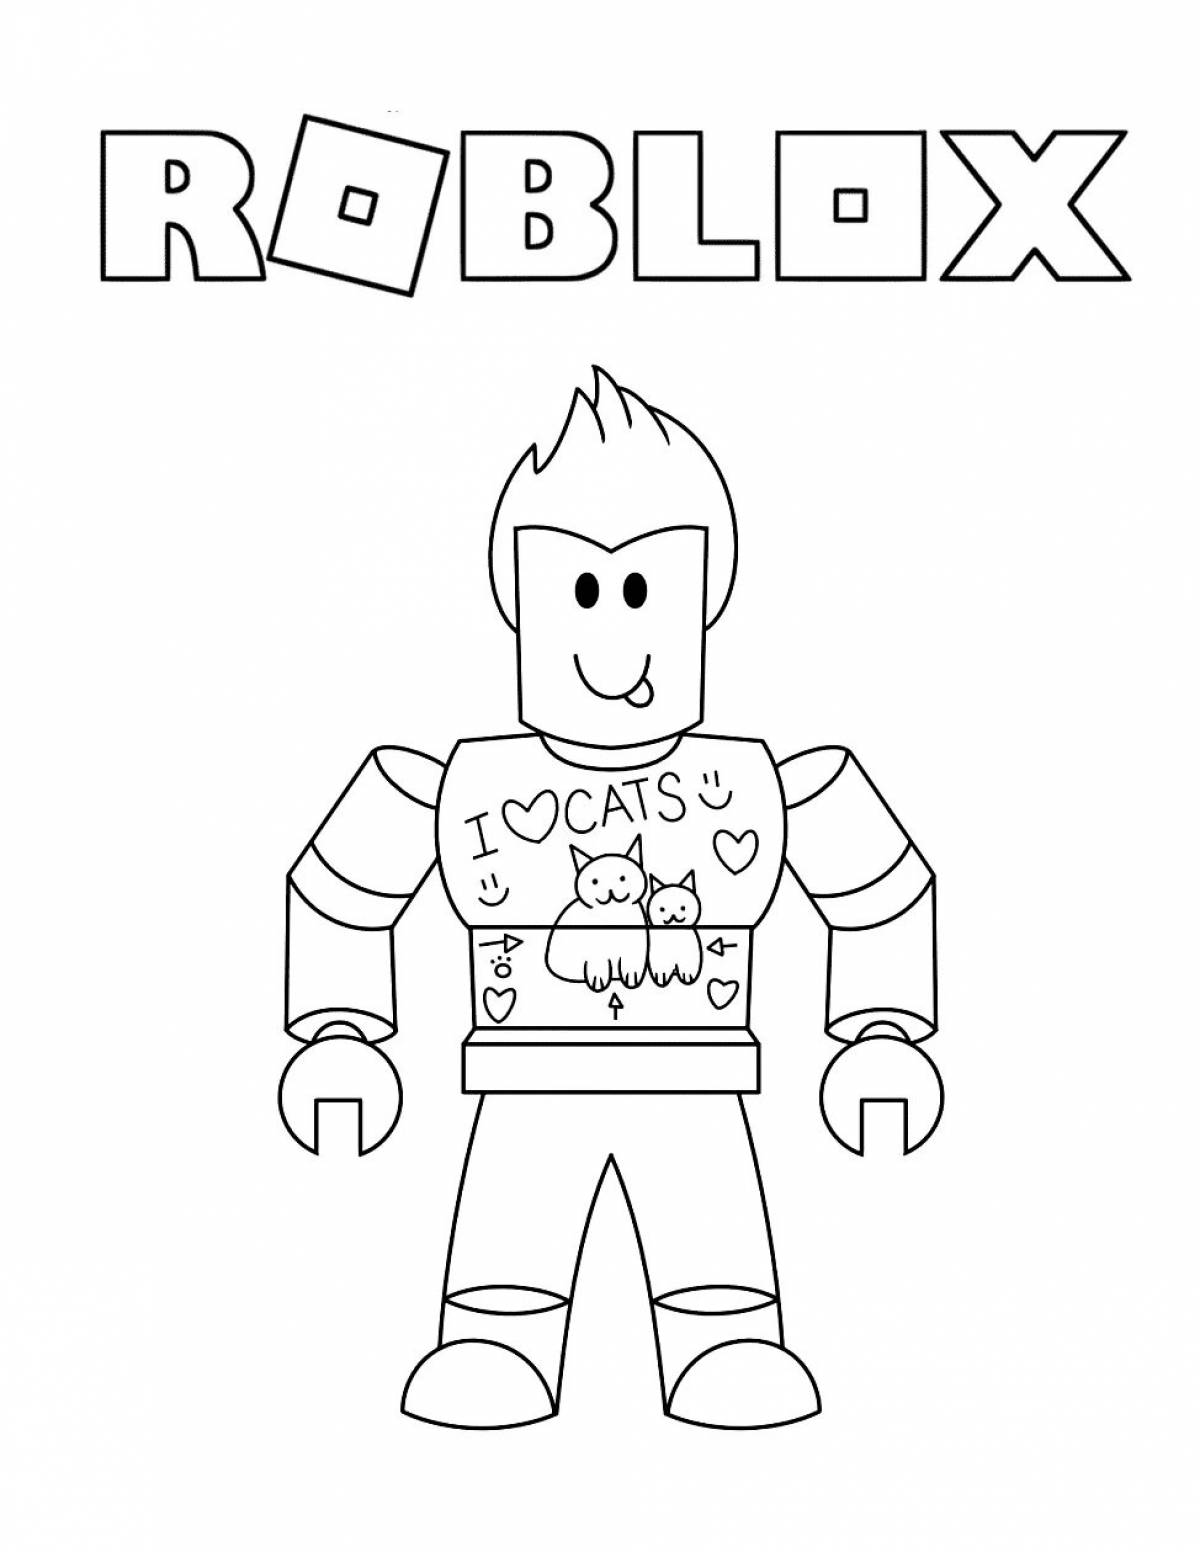 Roblox bebrik #6